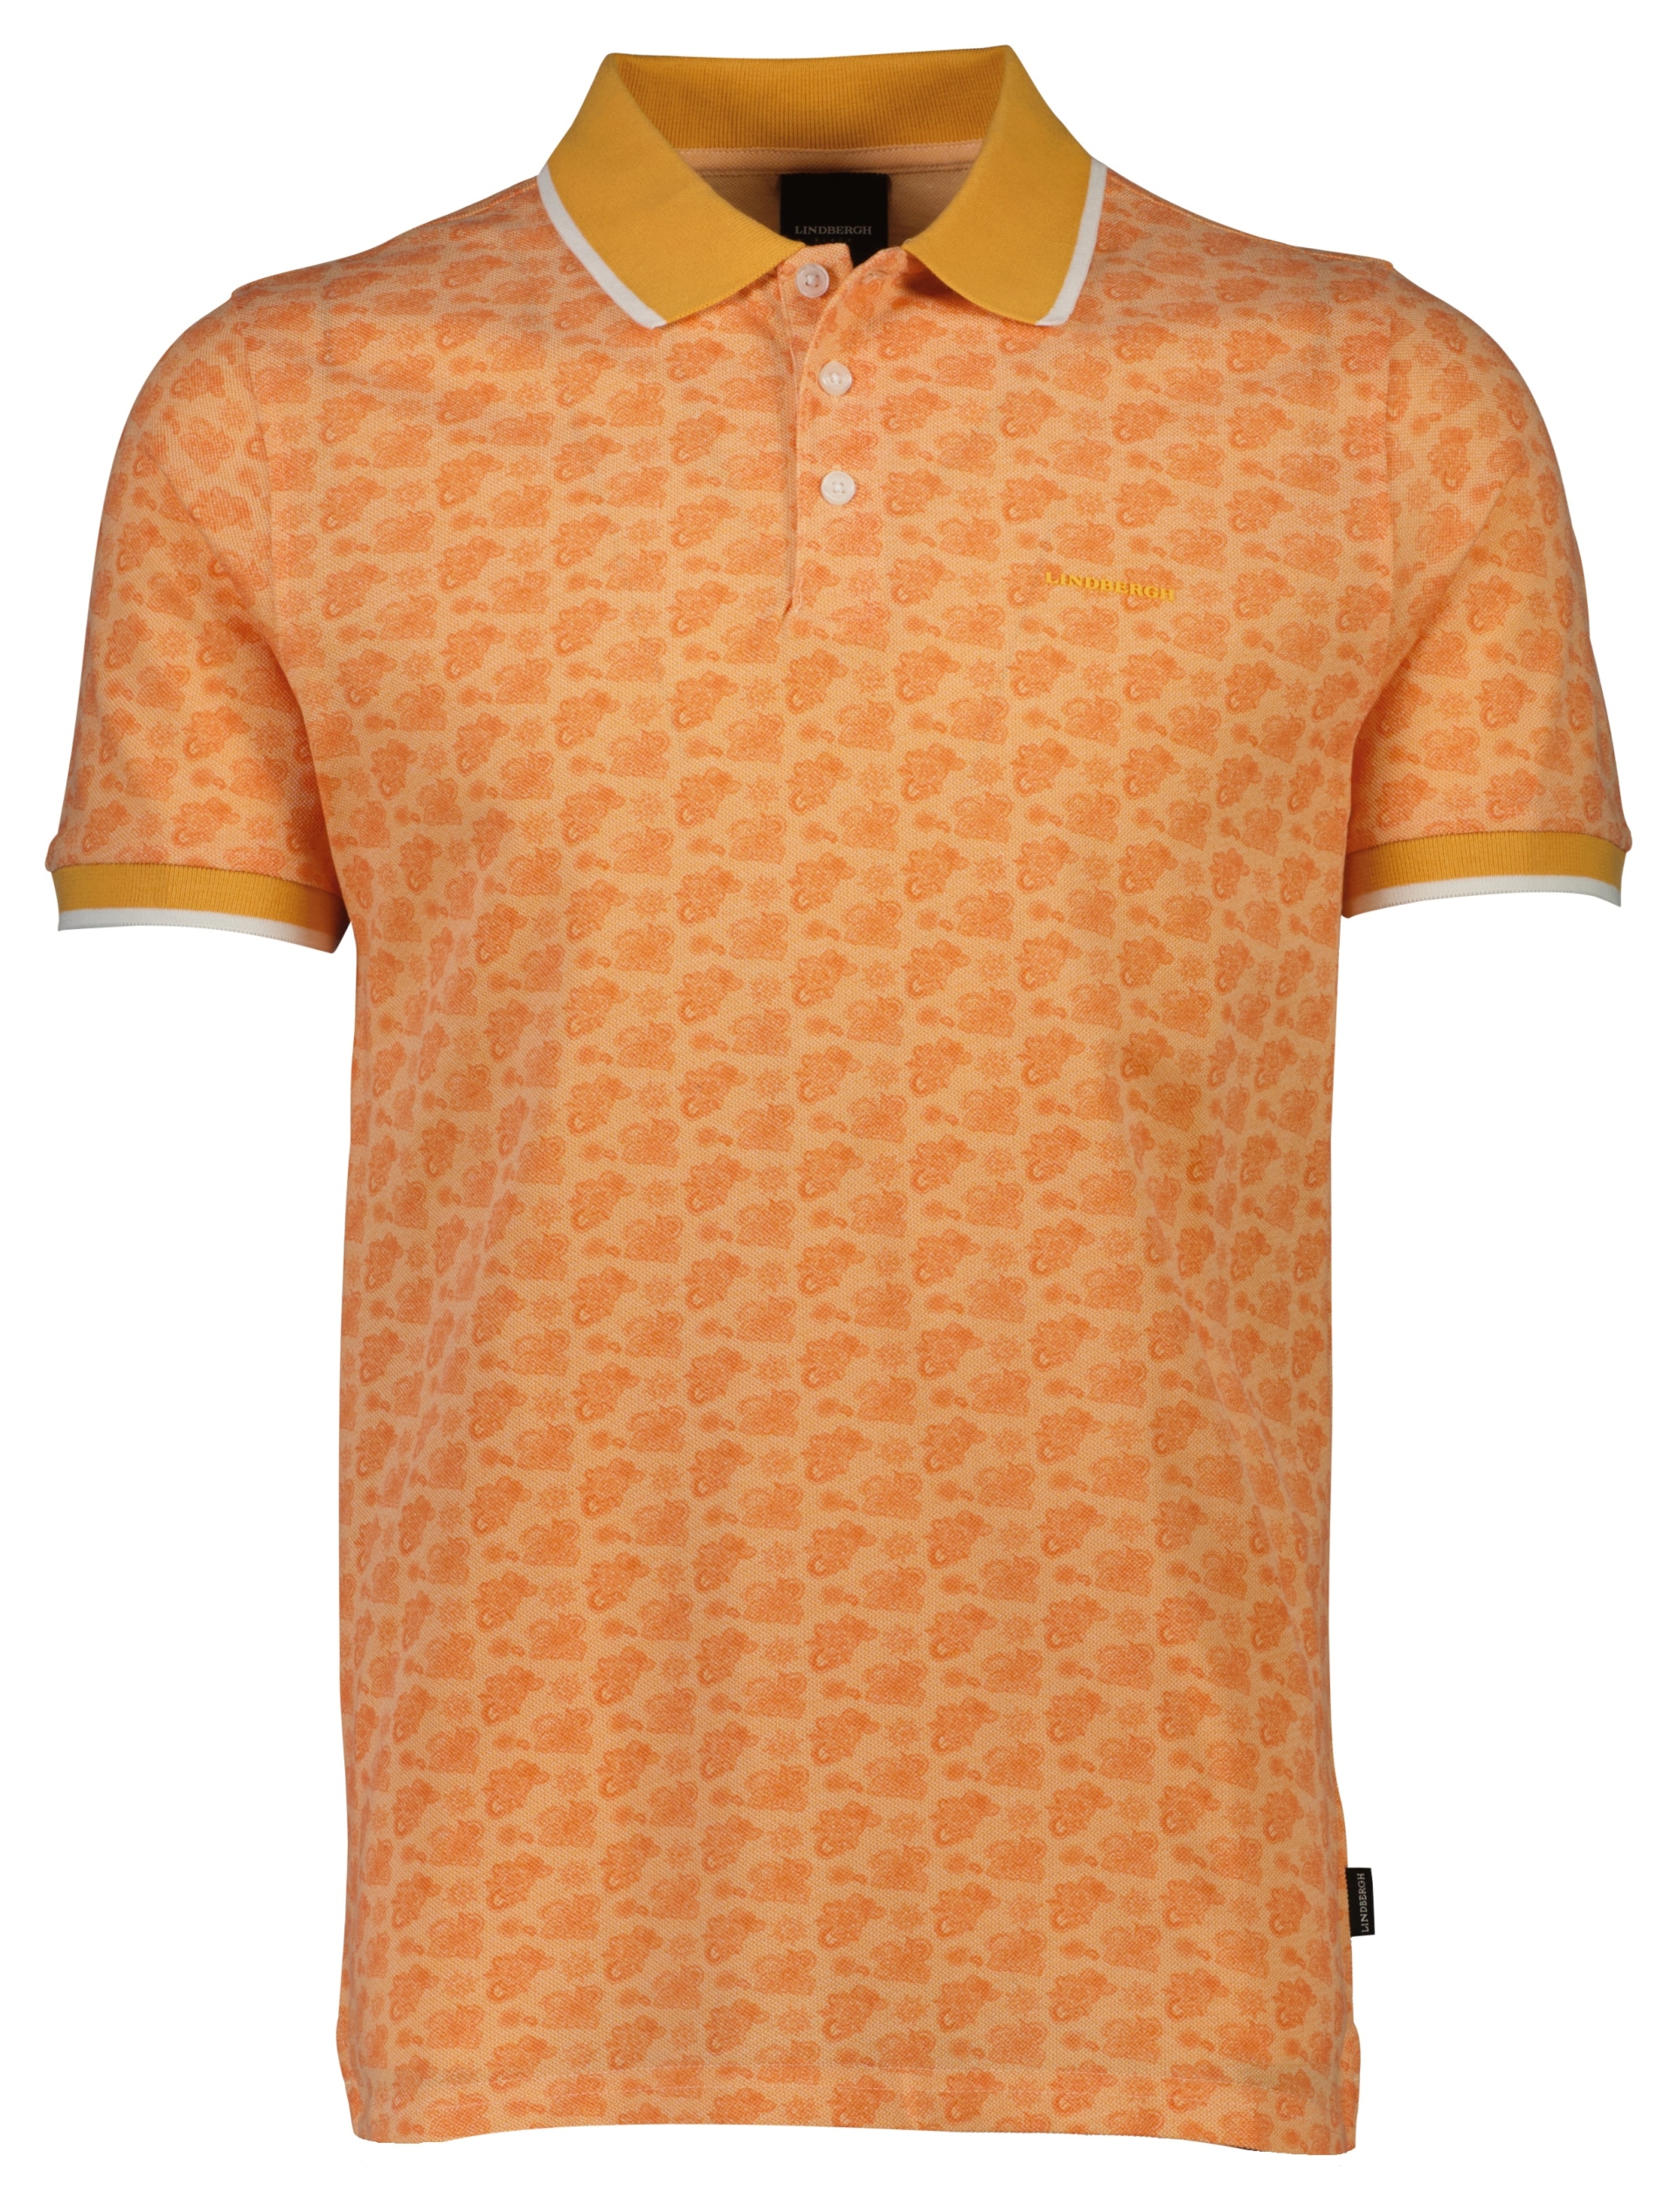 Lindbergh Polo shirt orange / lt apricot mix